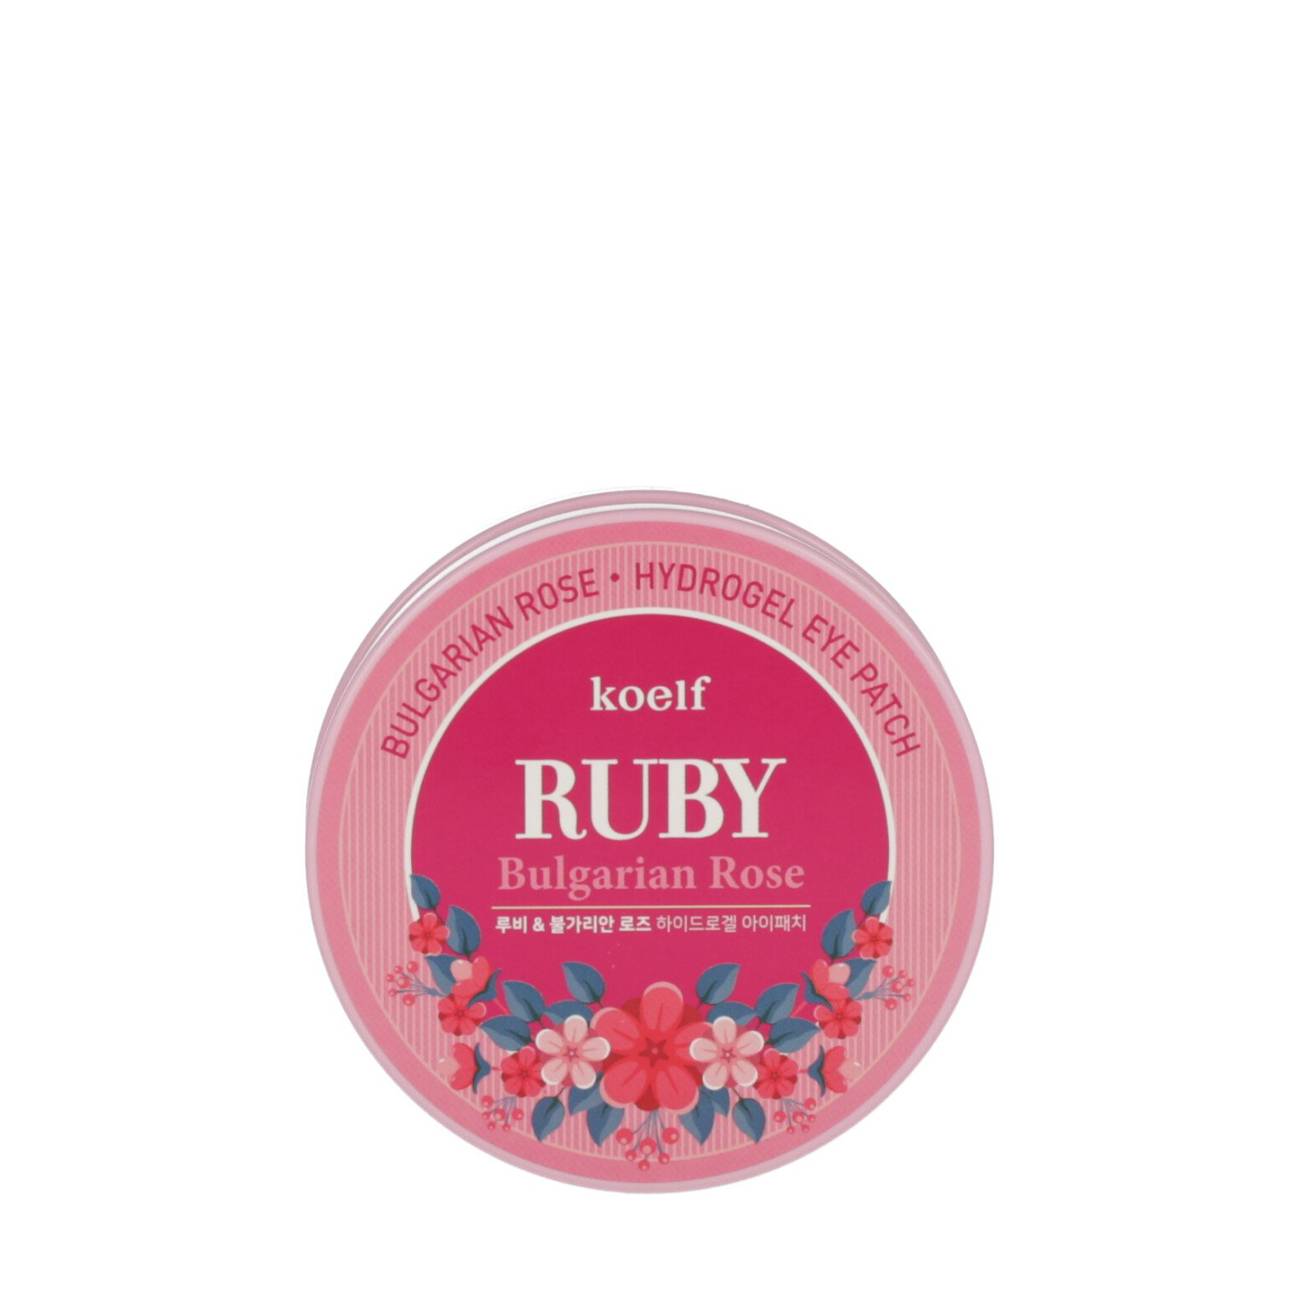 Ruby & Bulgarian Rose Eye Patch – 60 Pieces bestvalue